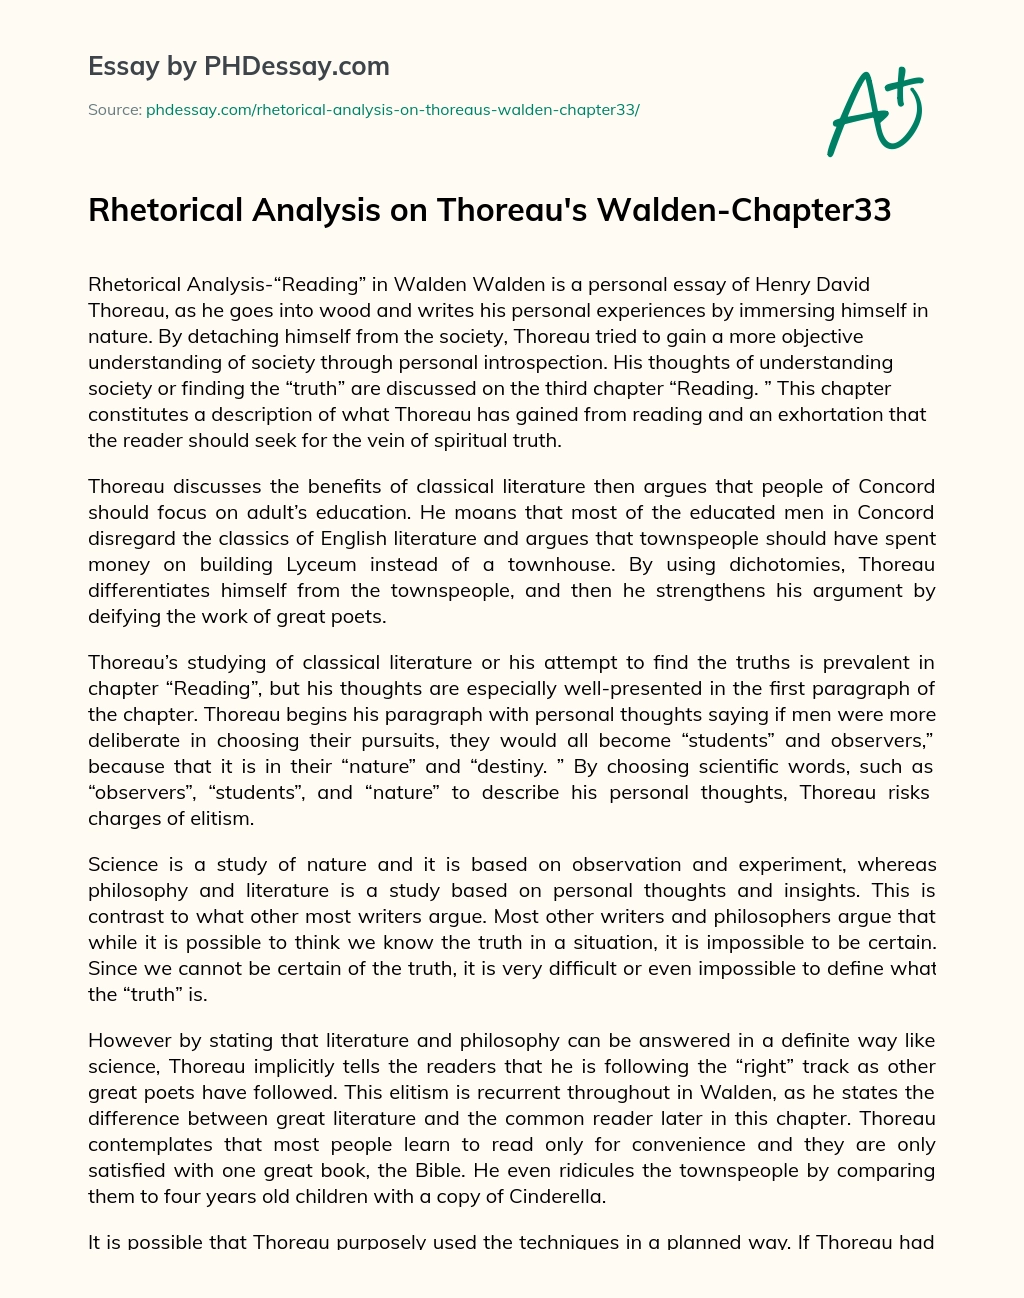 Rhetorical Analysis on Thoreau’s Walden-Chapter33 essay